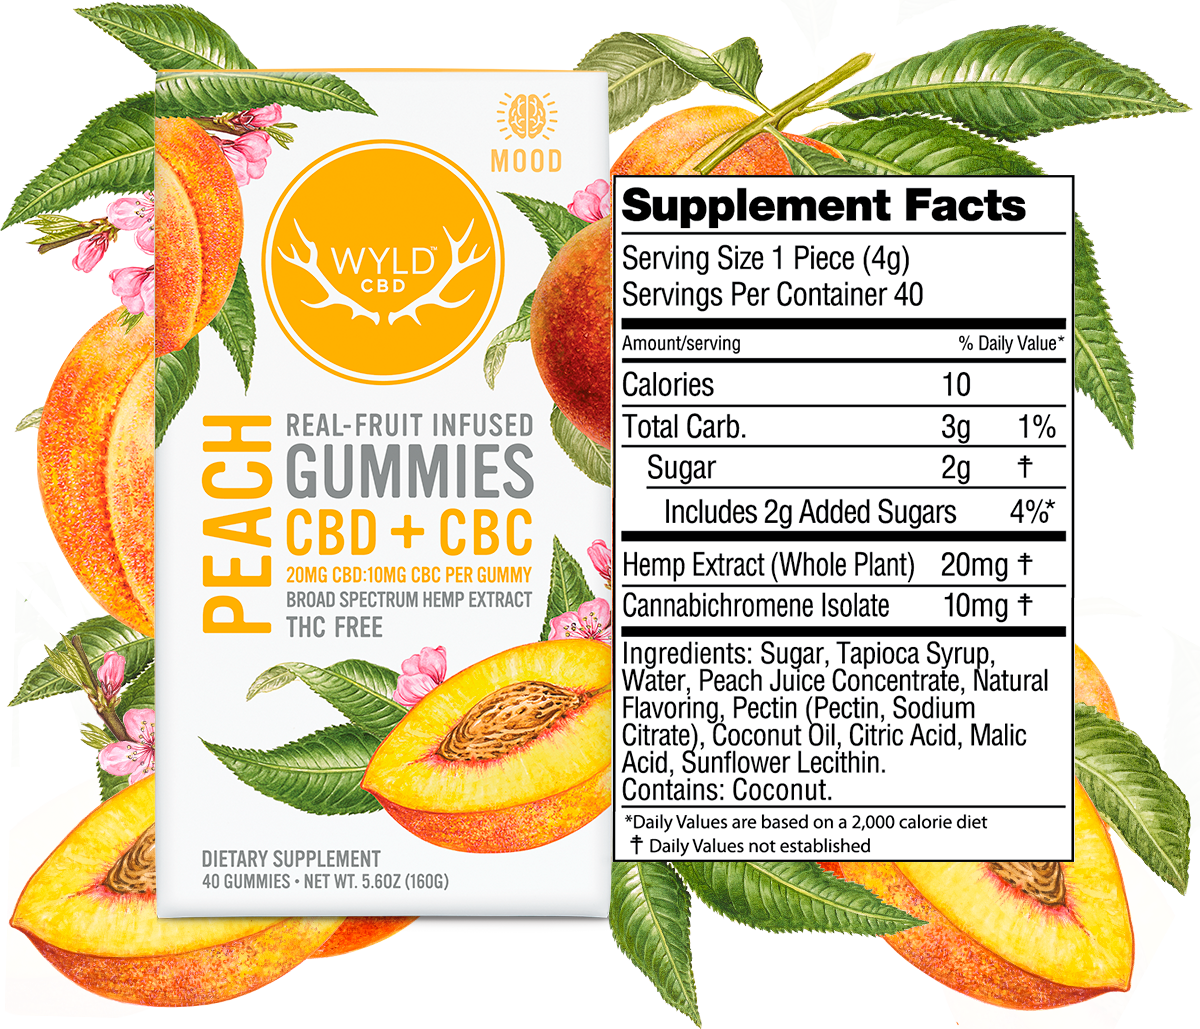 Wyld CBD Peach CBG Gummies Nutrition Information